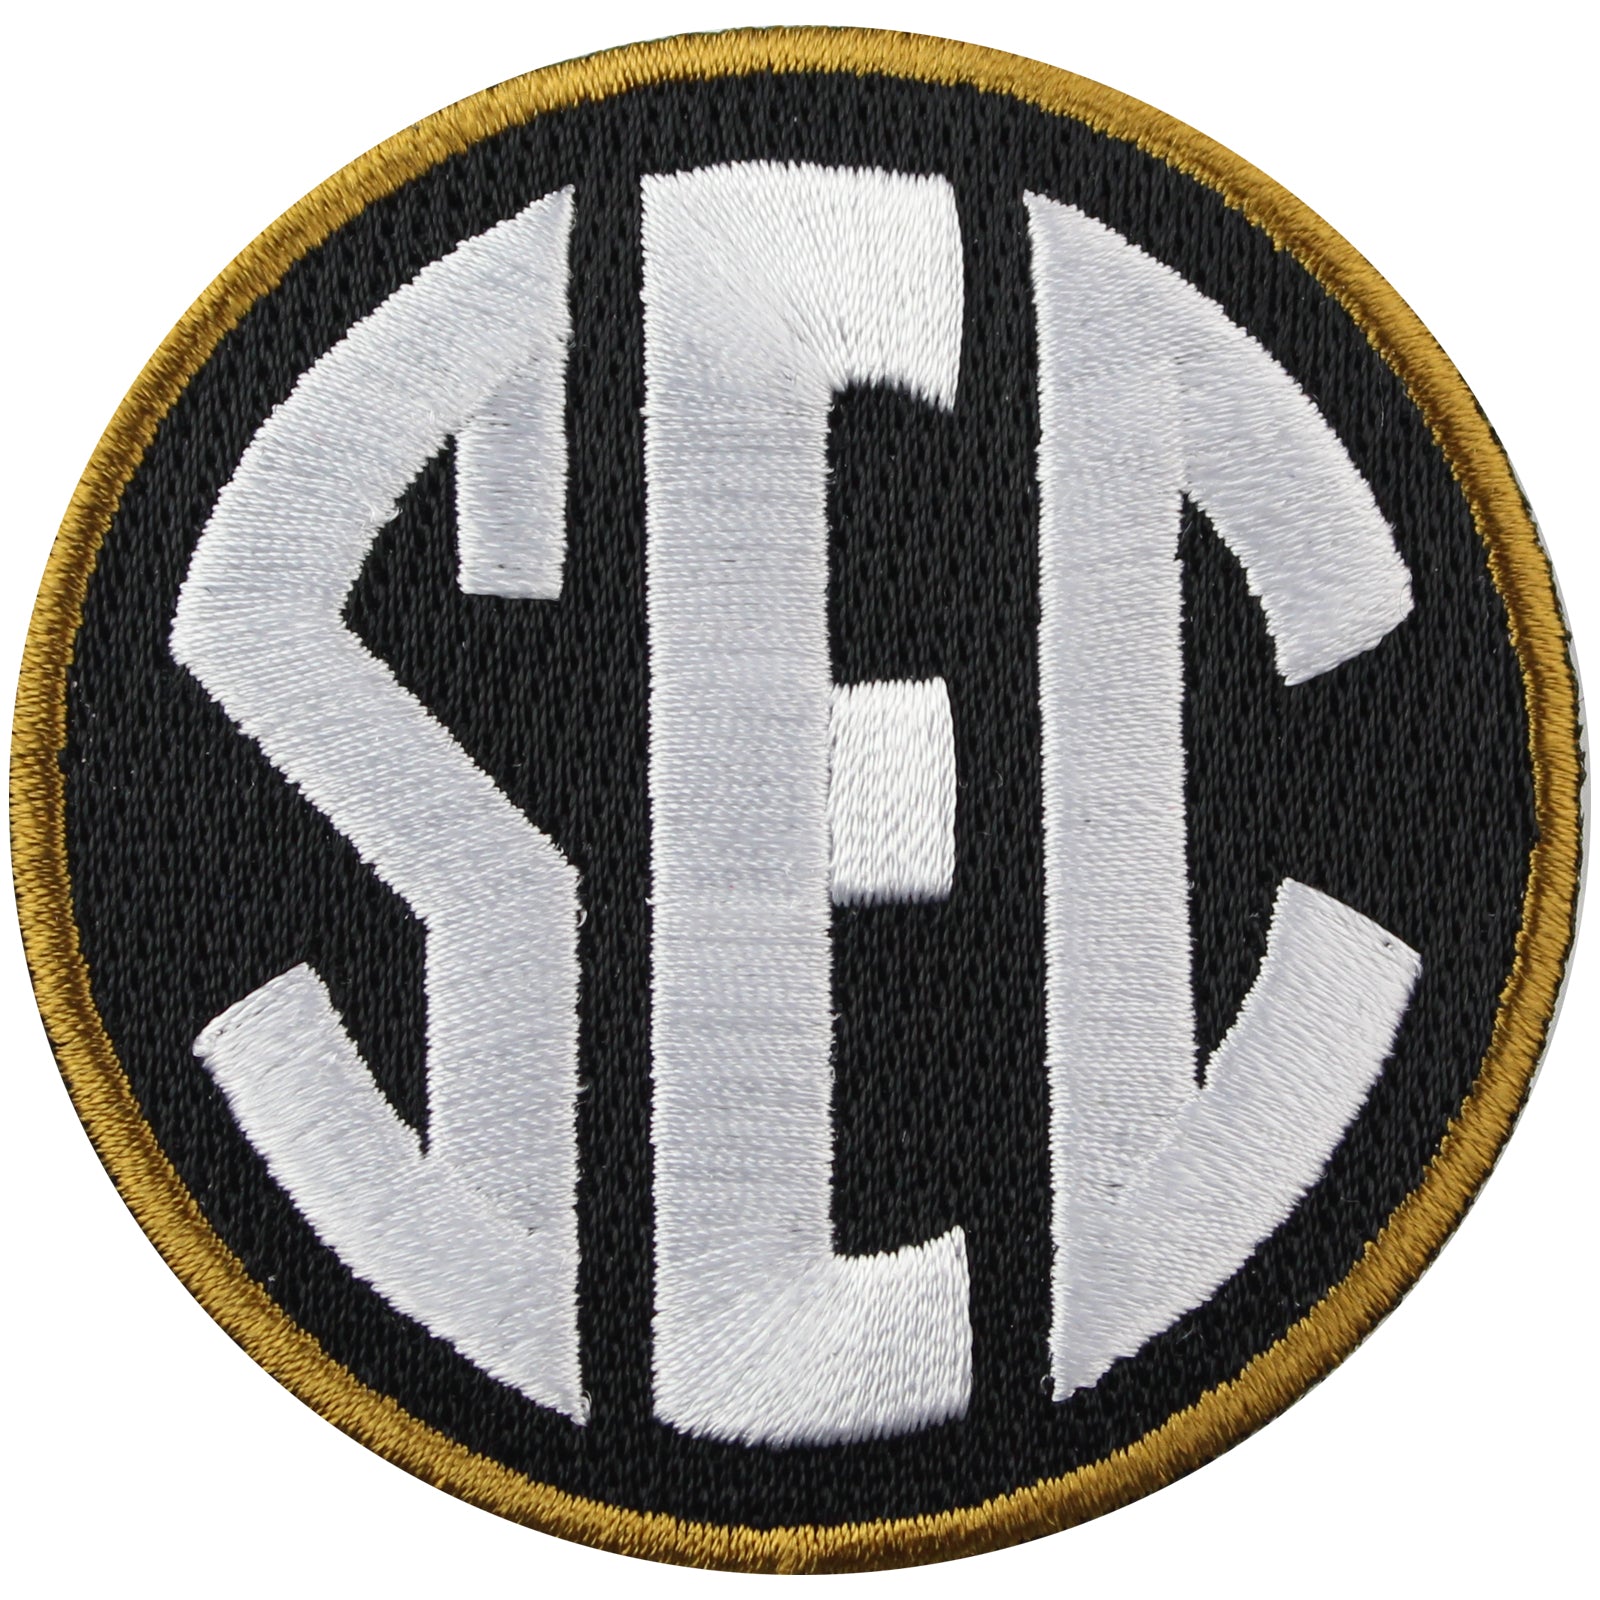 Vanderbilt Commodores SEC Conference Team Jersey Uniform Patch 